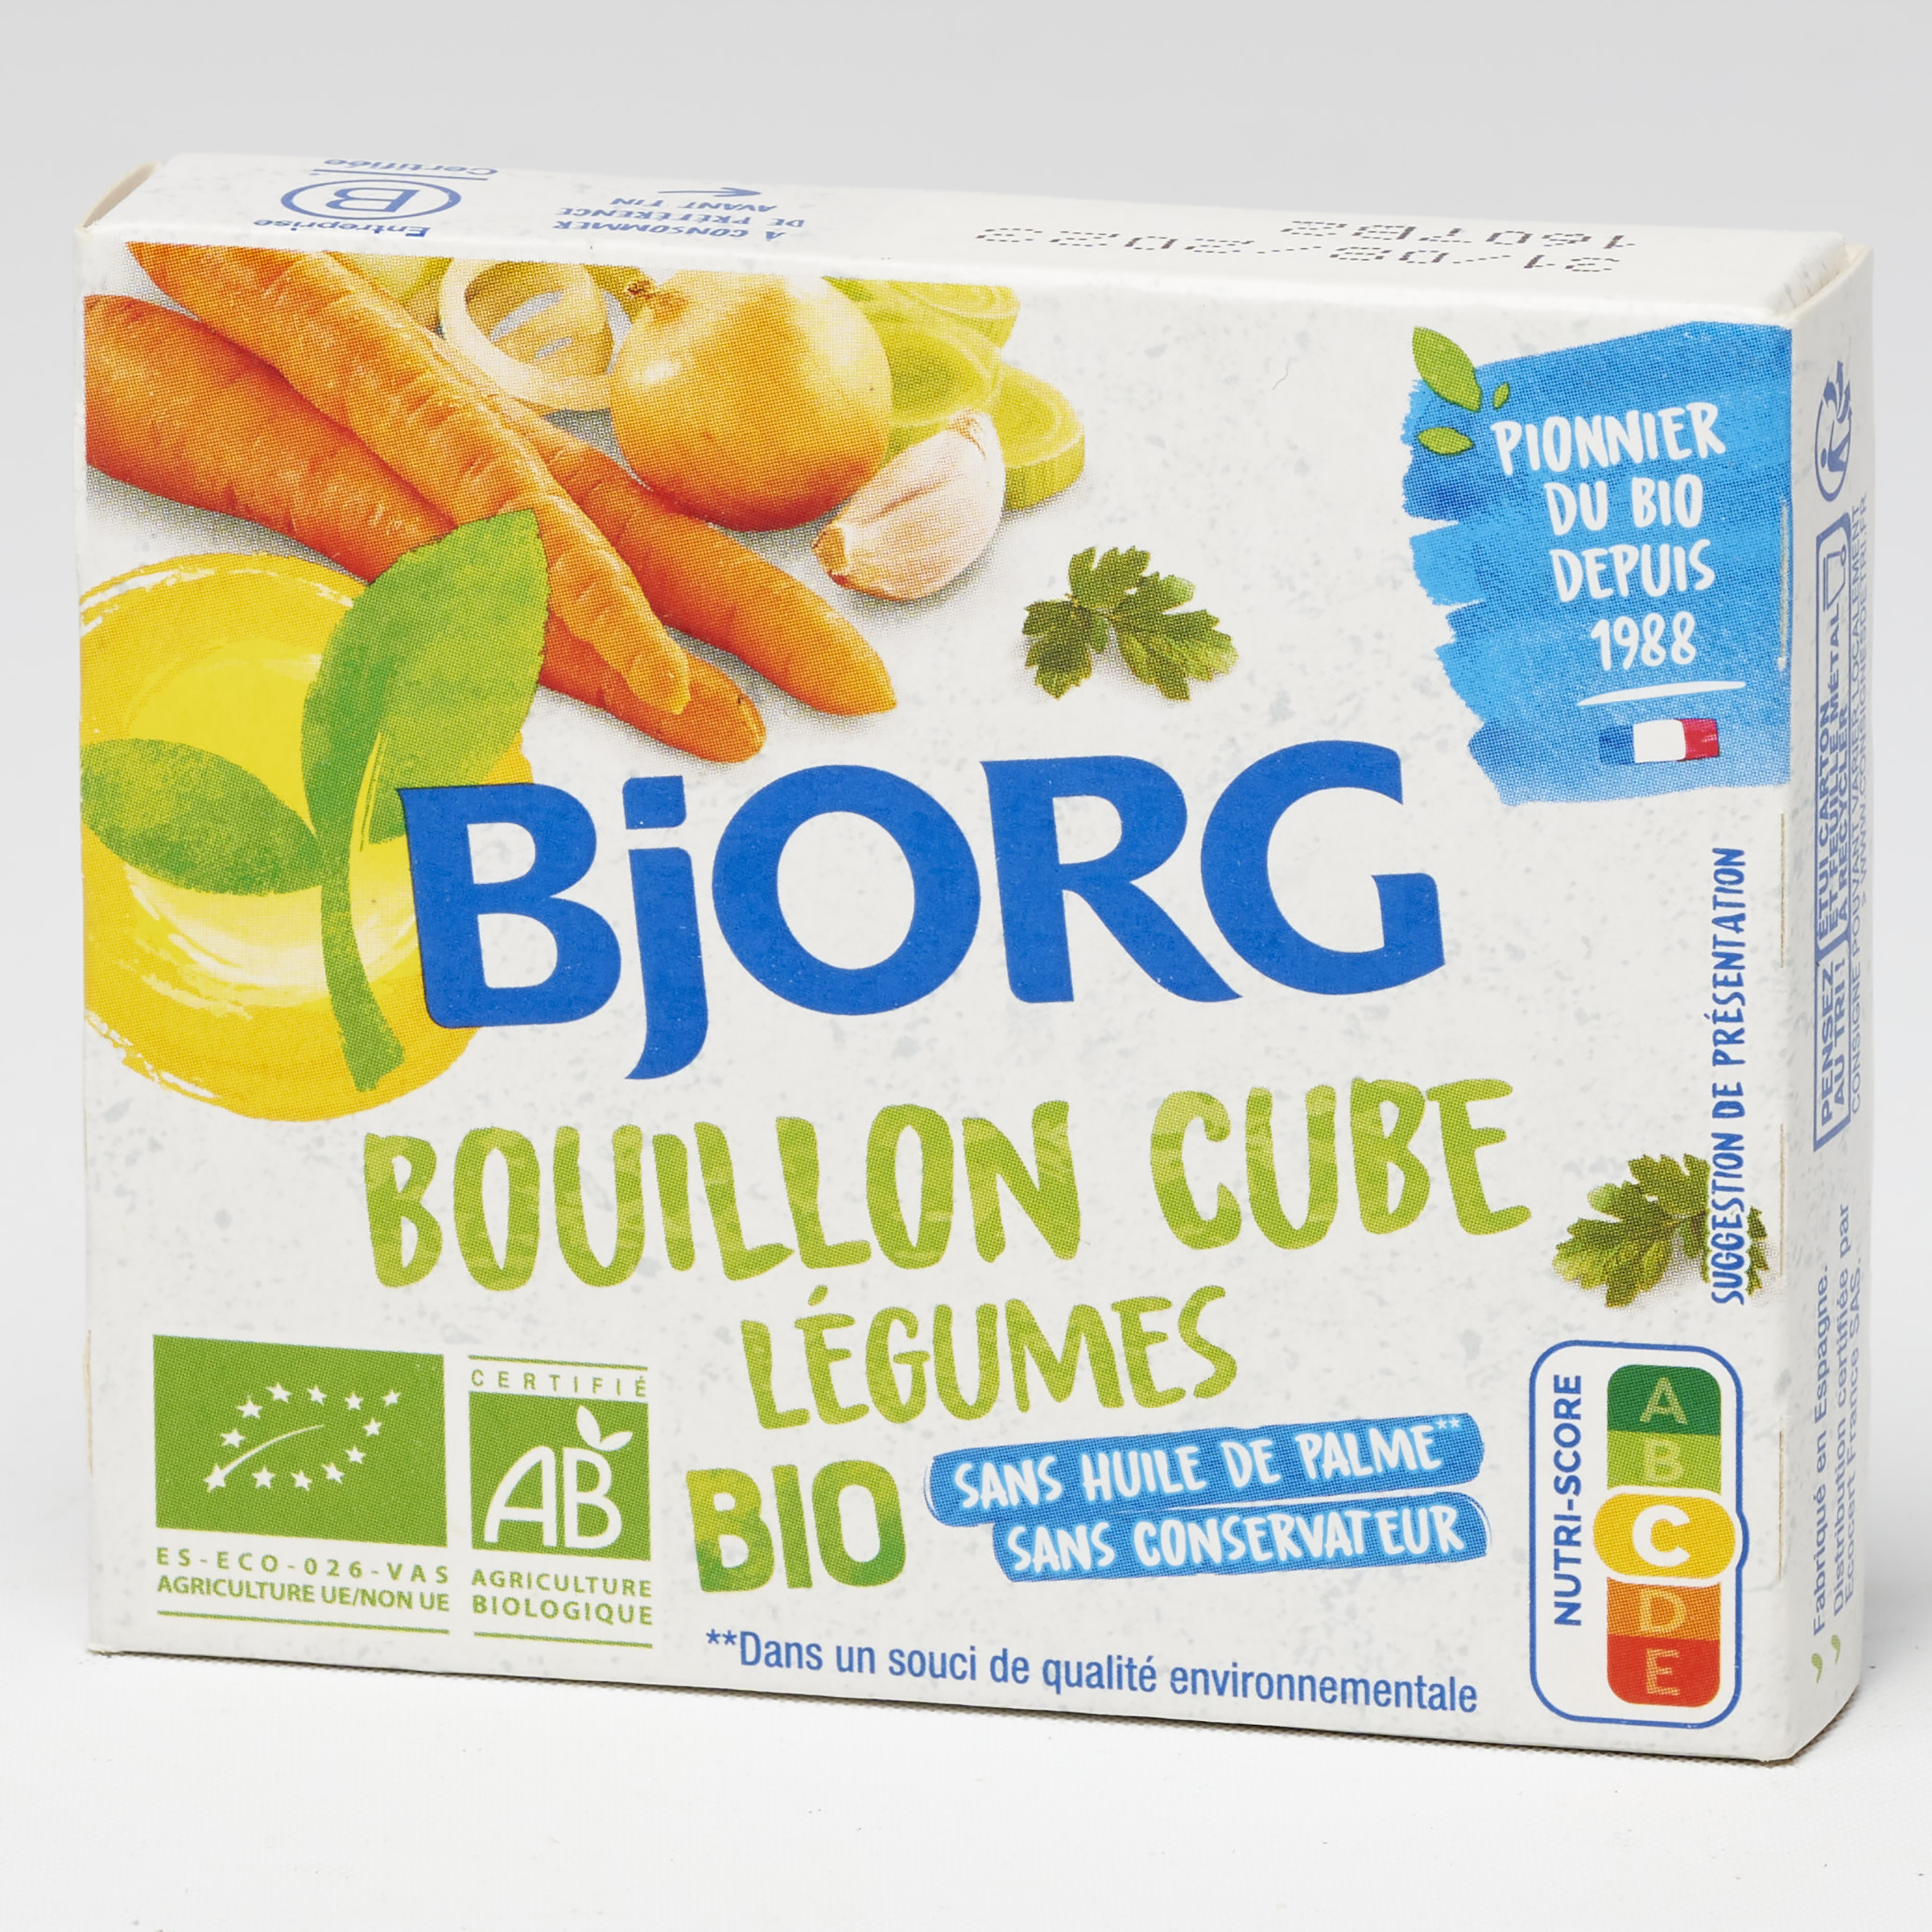 Bjorg Bouillon cube légumes bio  - 